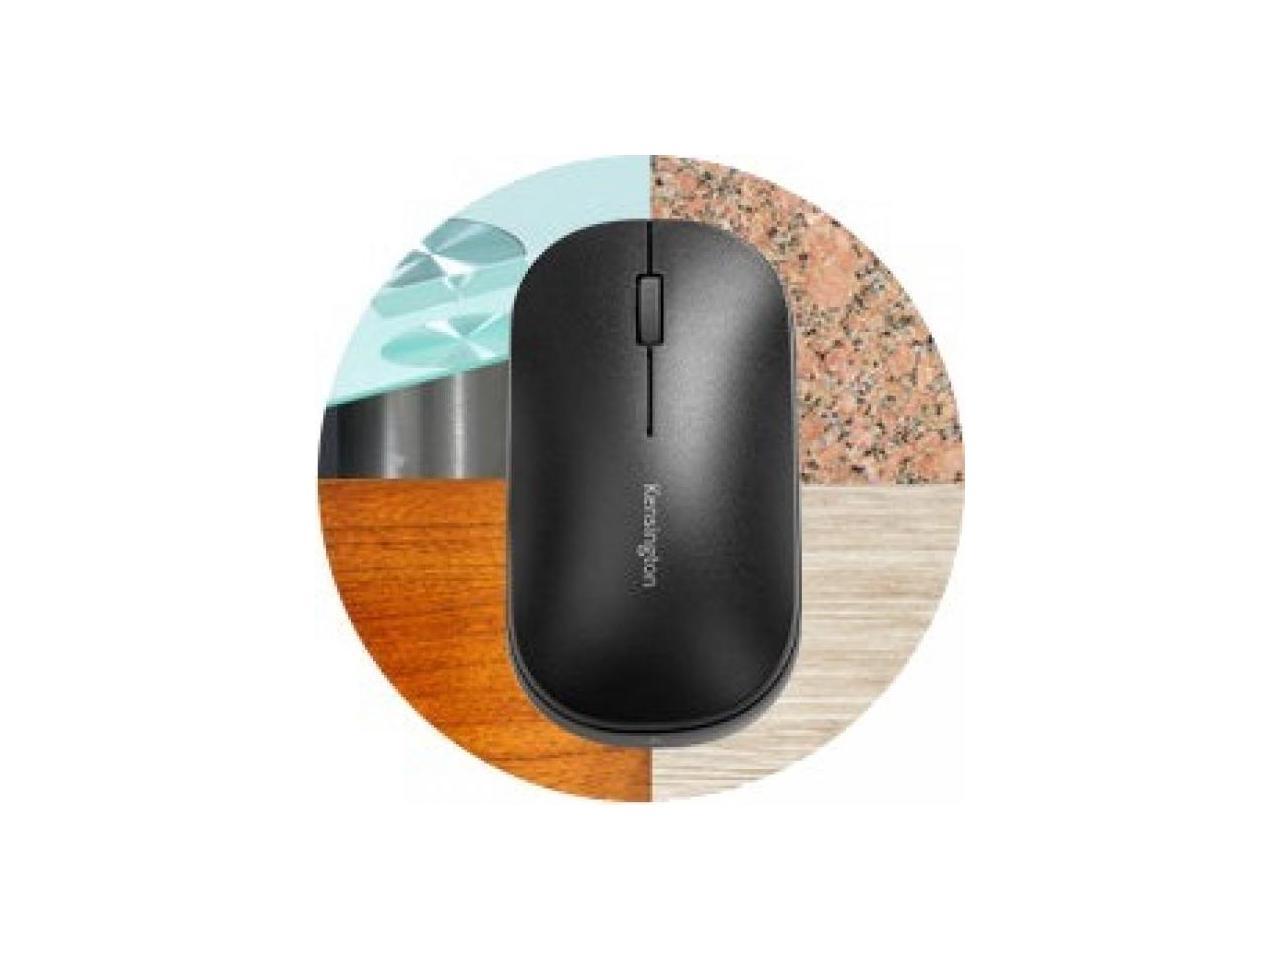 kensington pocket mouse wireless